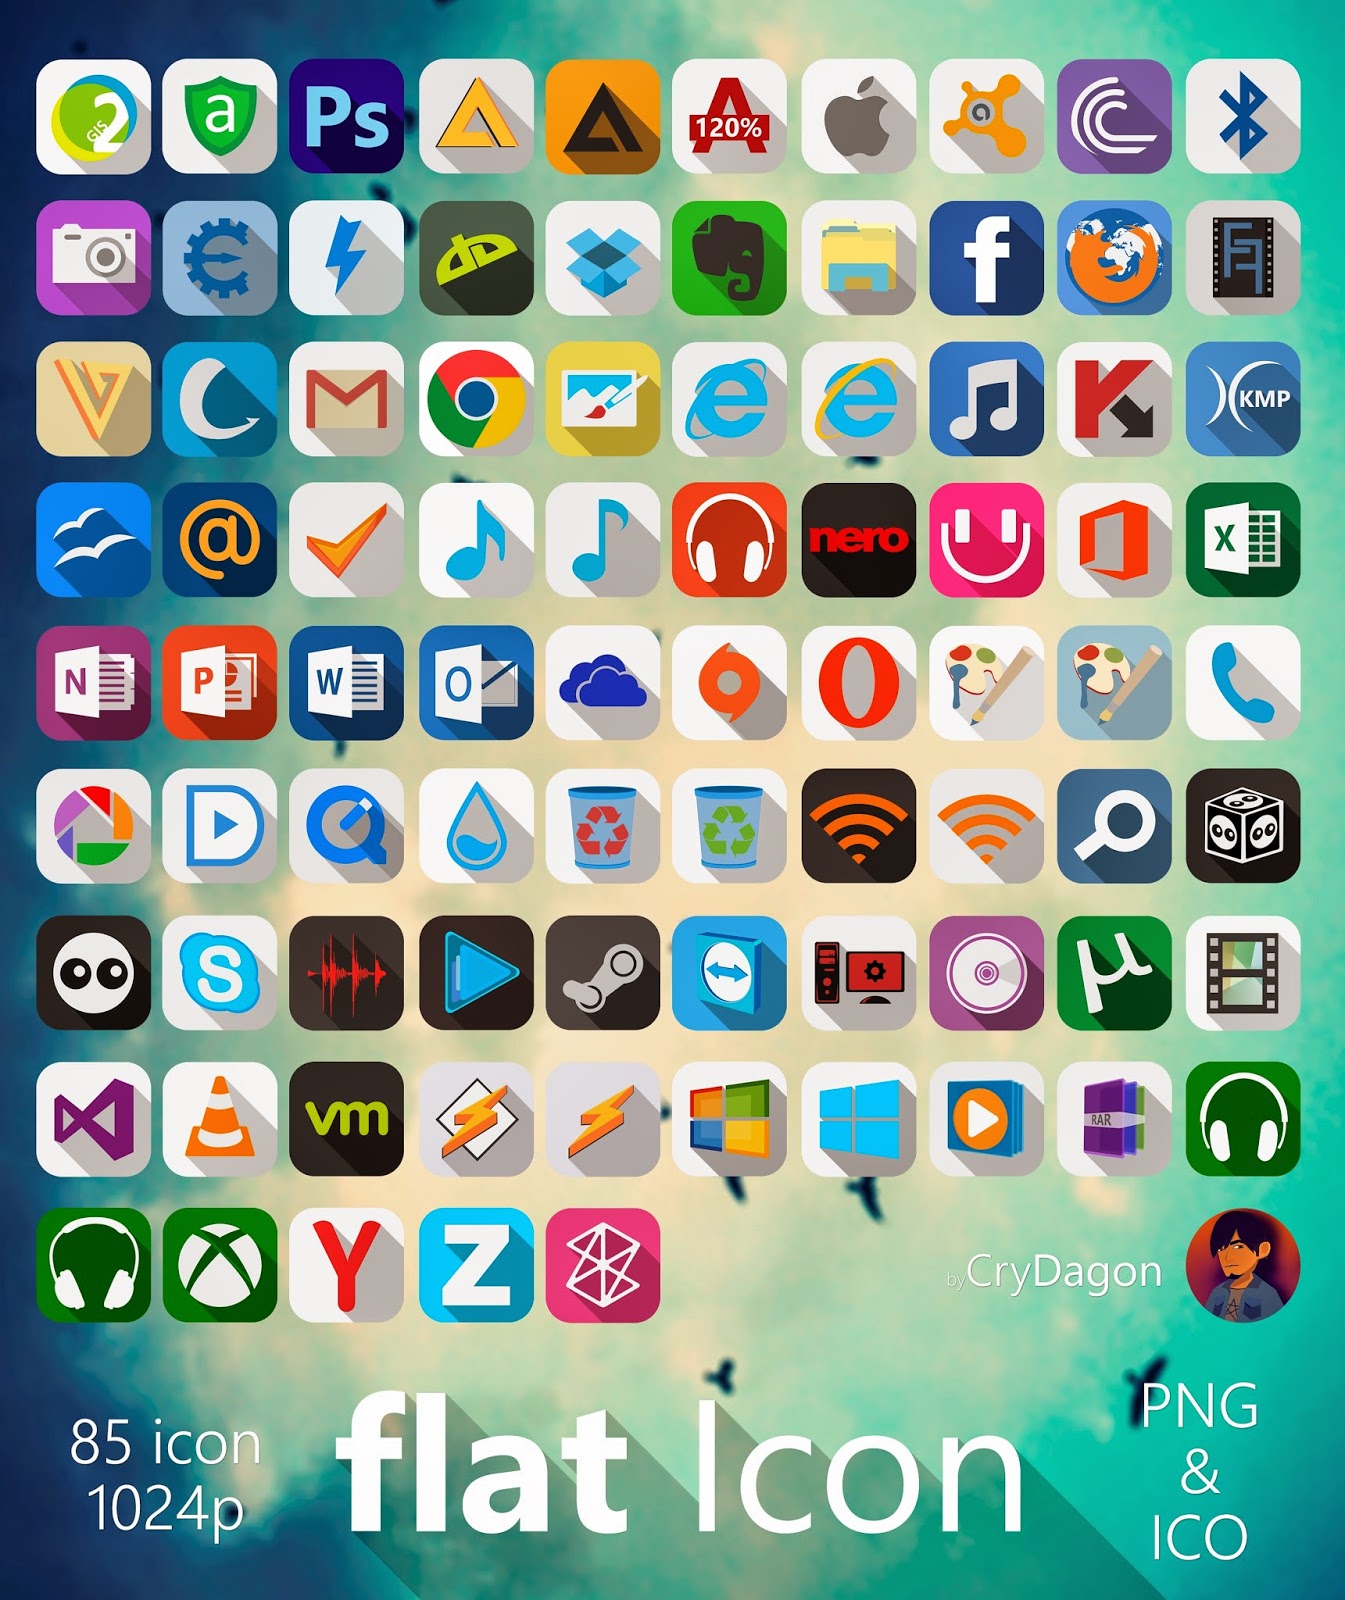 download free themes rocketdock icons windows 10